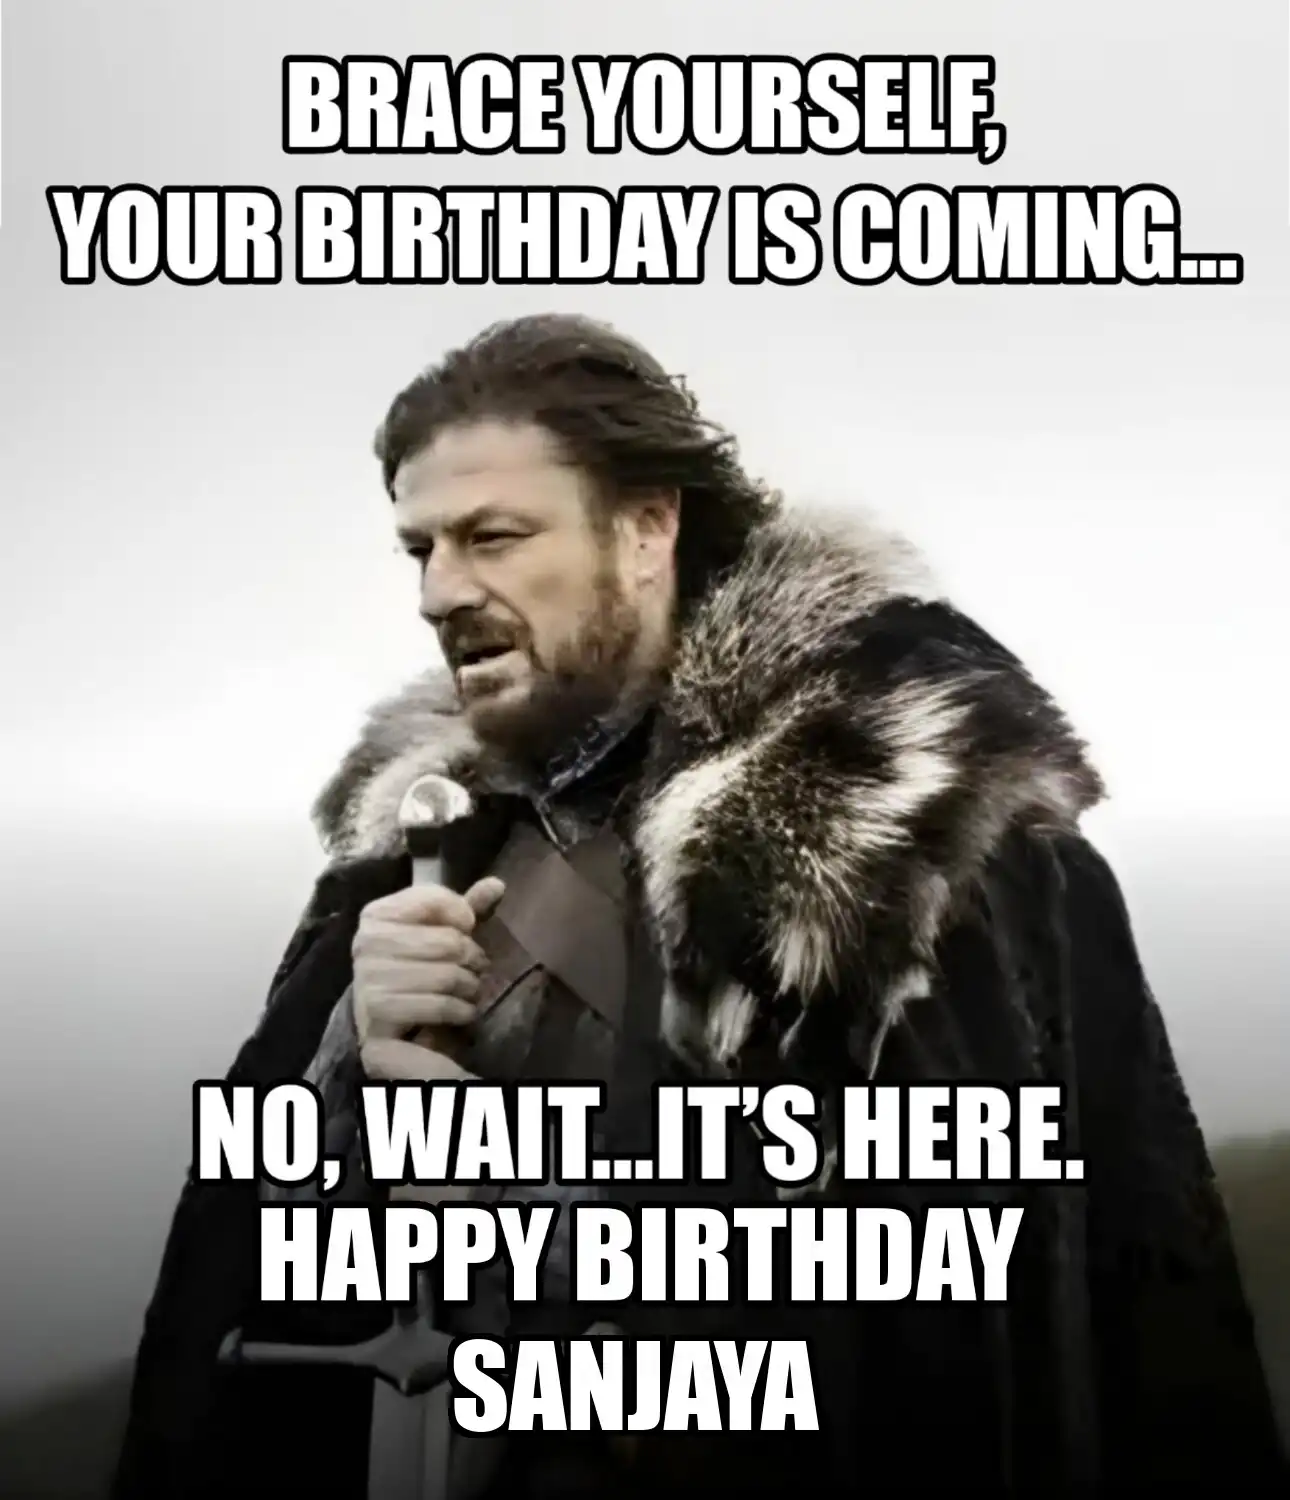 Happy Birthday Sanjaya Brace Yourself Your Birthday Is Coming Meme